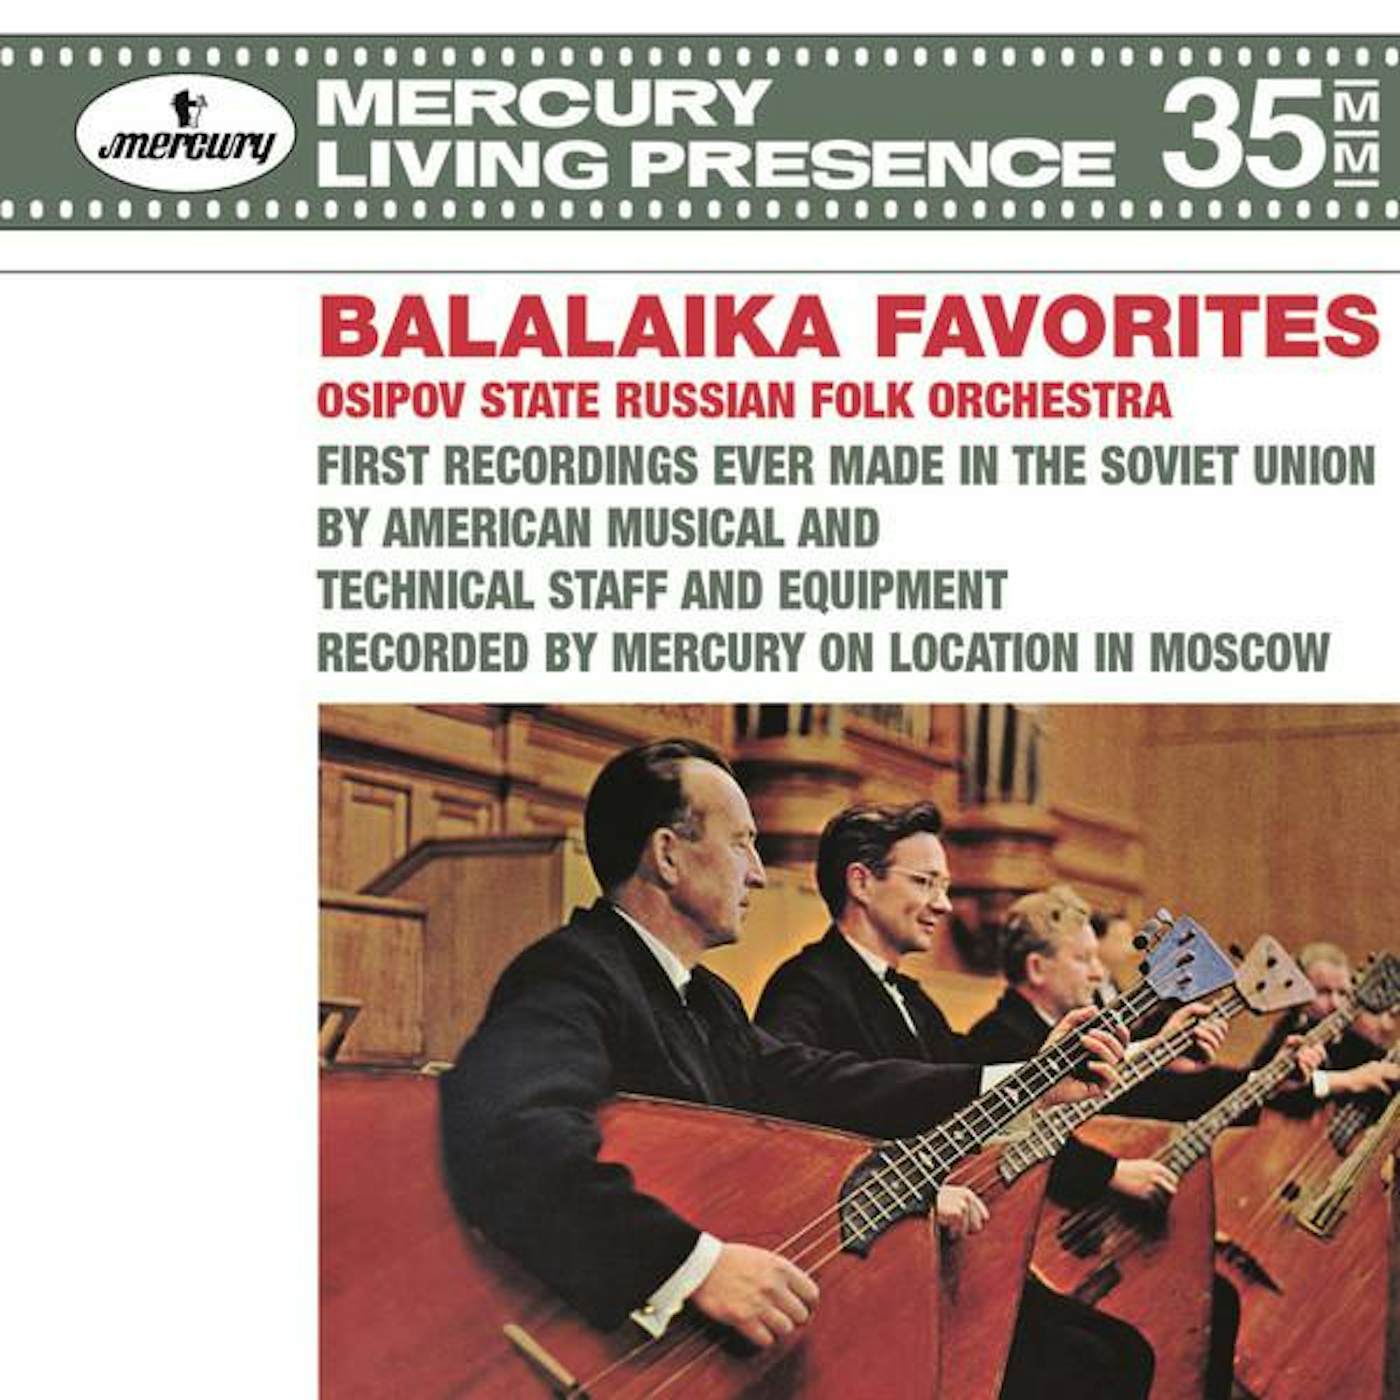 GNUTOV / OSIPOV STATE RUSSIAN FOLK ORCHESTRA BALALAIKA FAVOURITES Vinyl Record